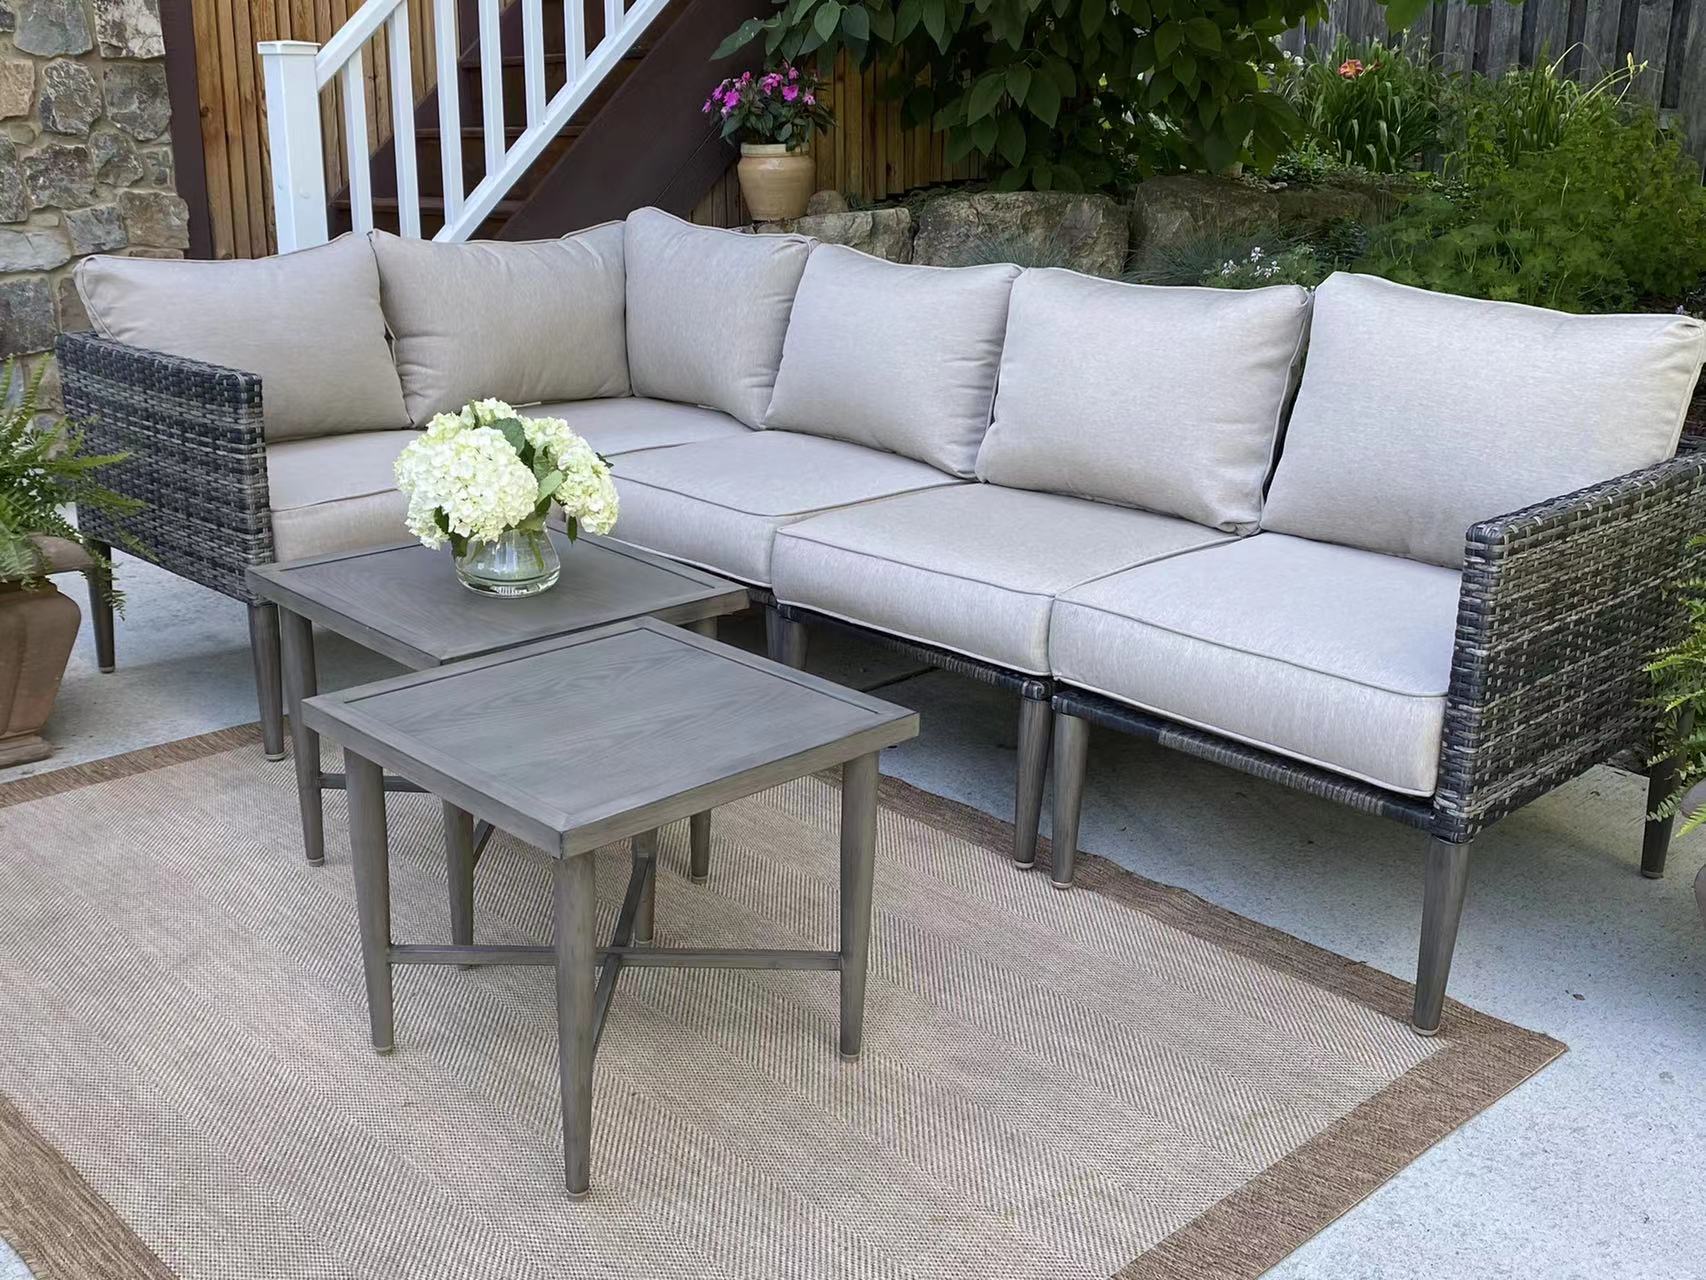 Donglin Outdoor Patio Furniture Sutton Creek 7-Piece Steel Sectional Sofa PE Wicker Rattan Set,Gray - image 15 of 16